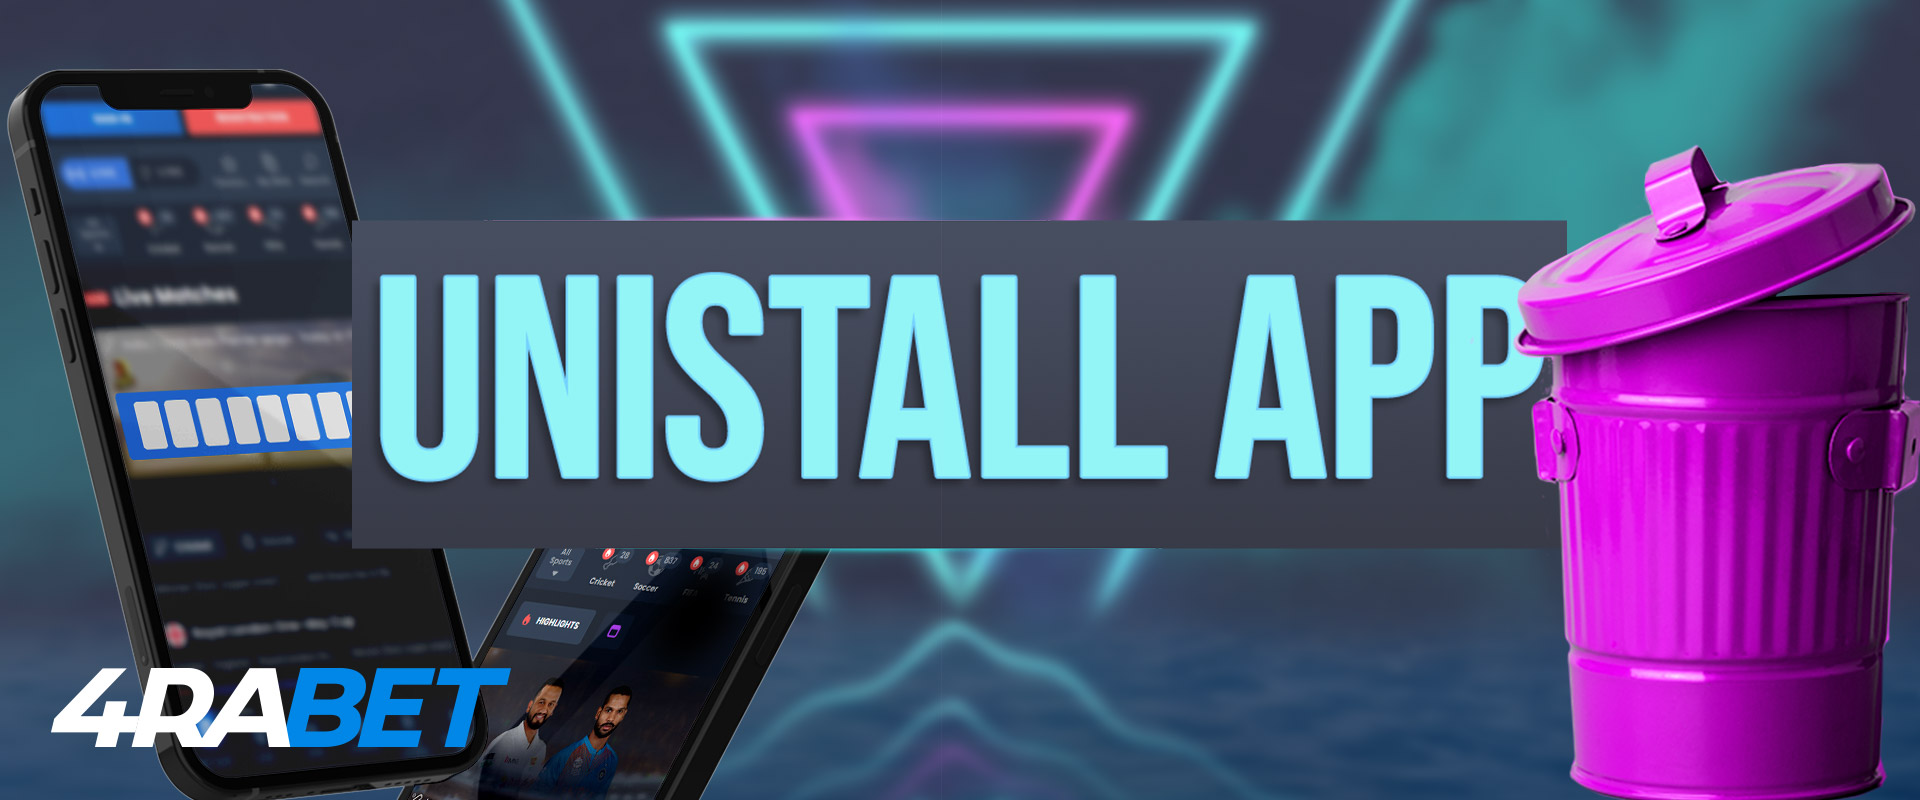 Unistall the 4rabet app.